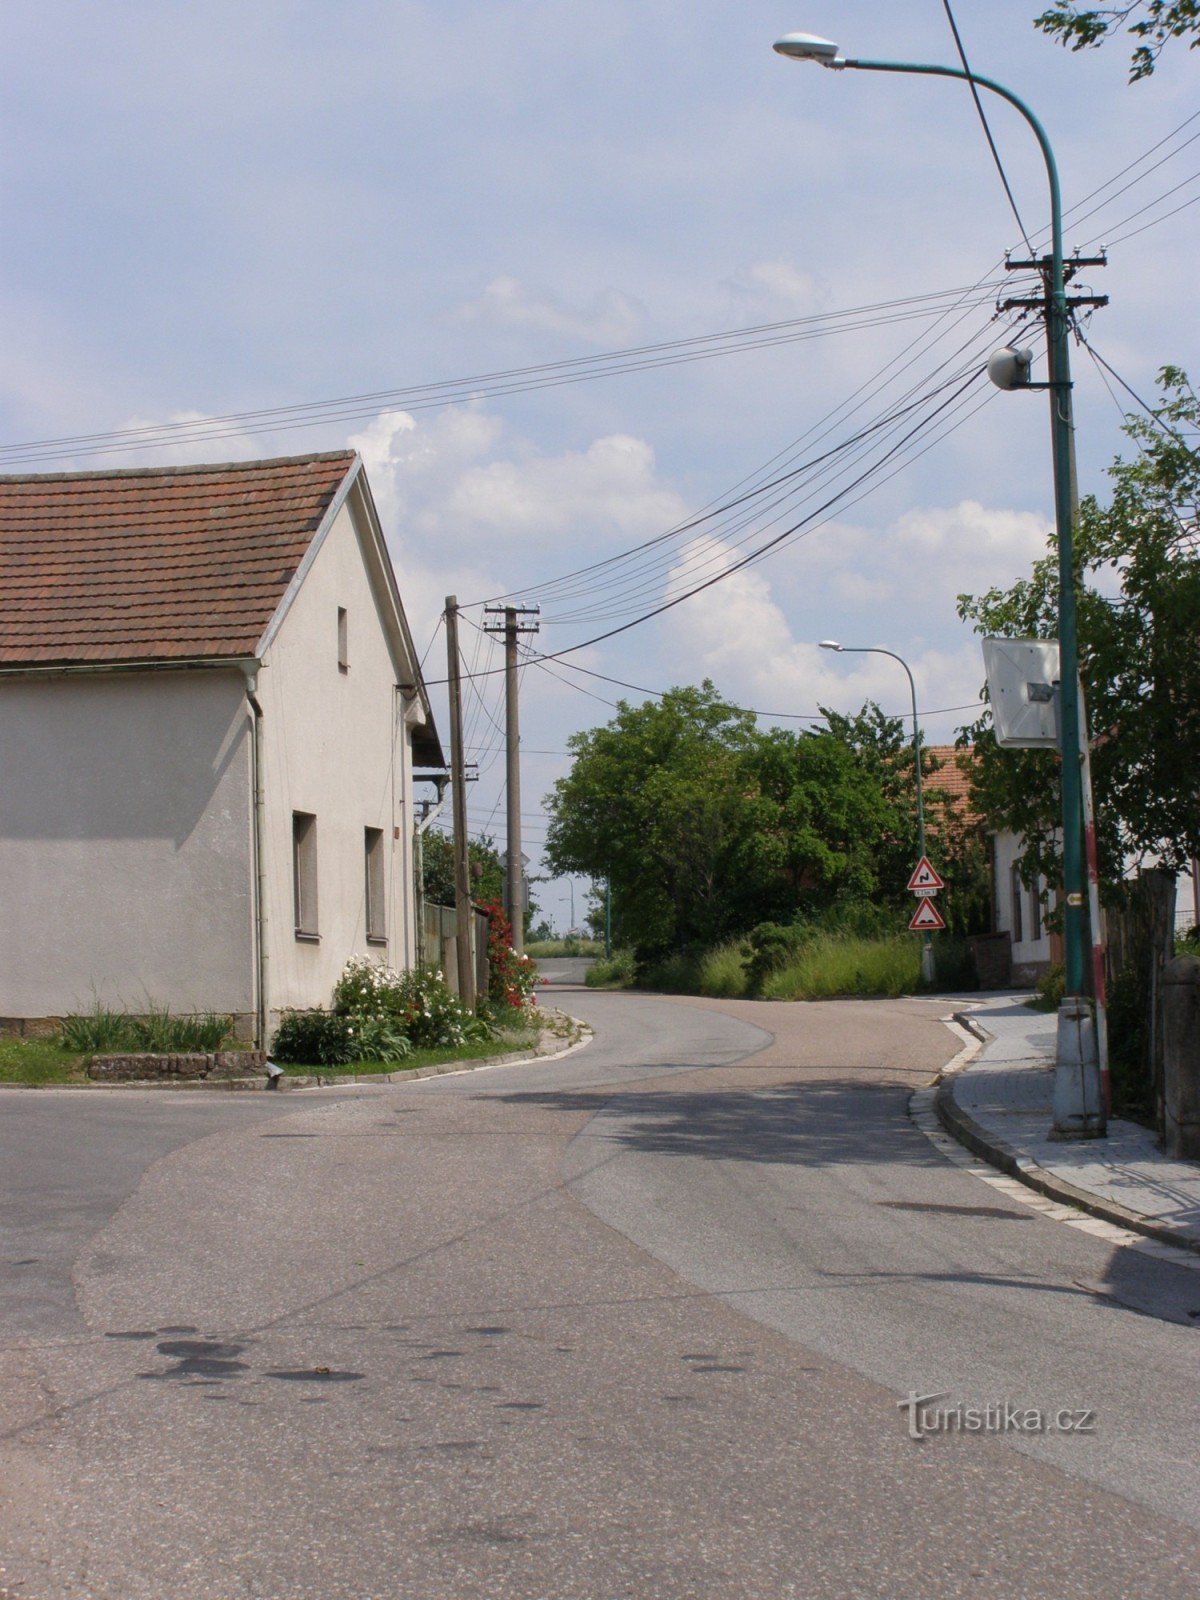 the tourist crossroads of Strězetice